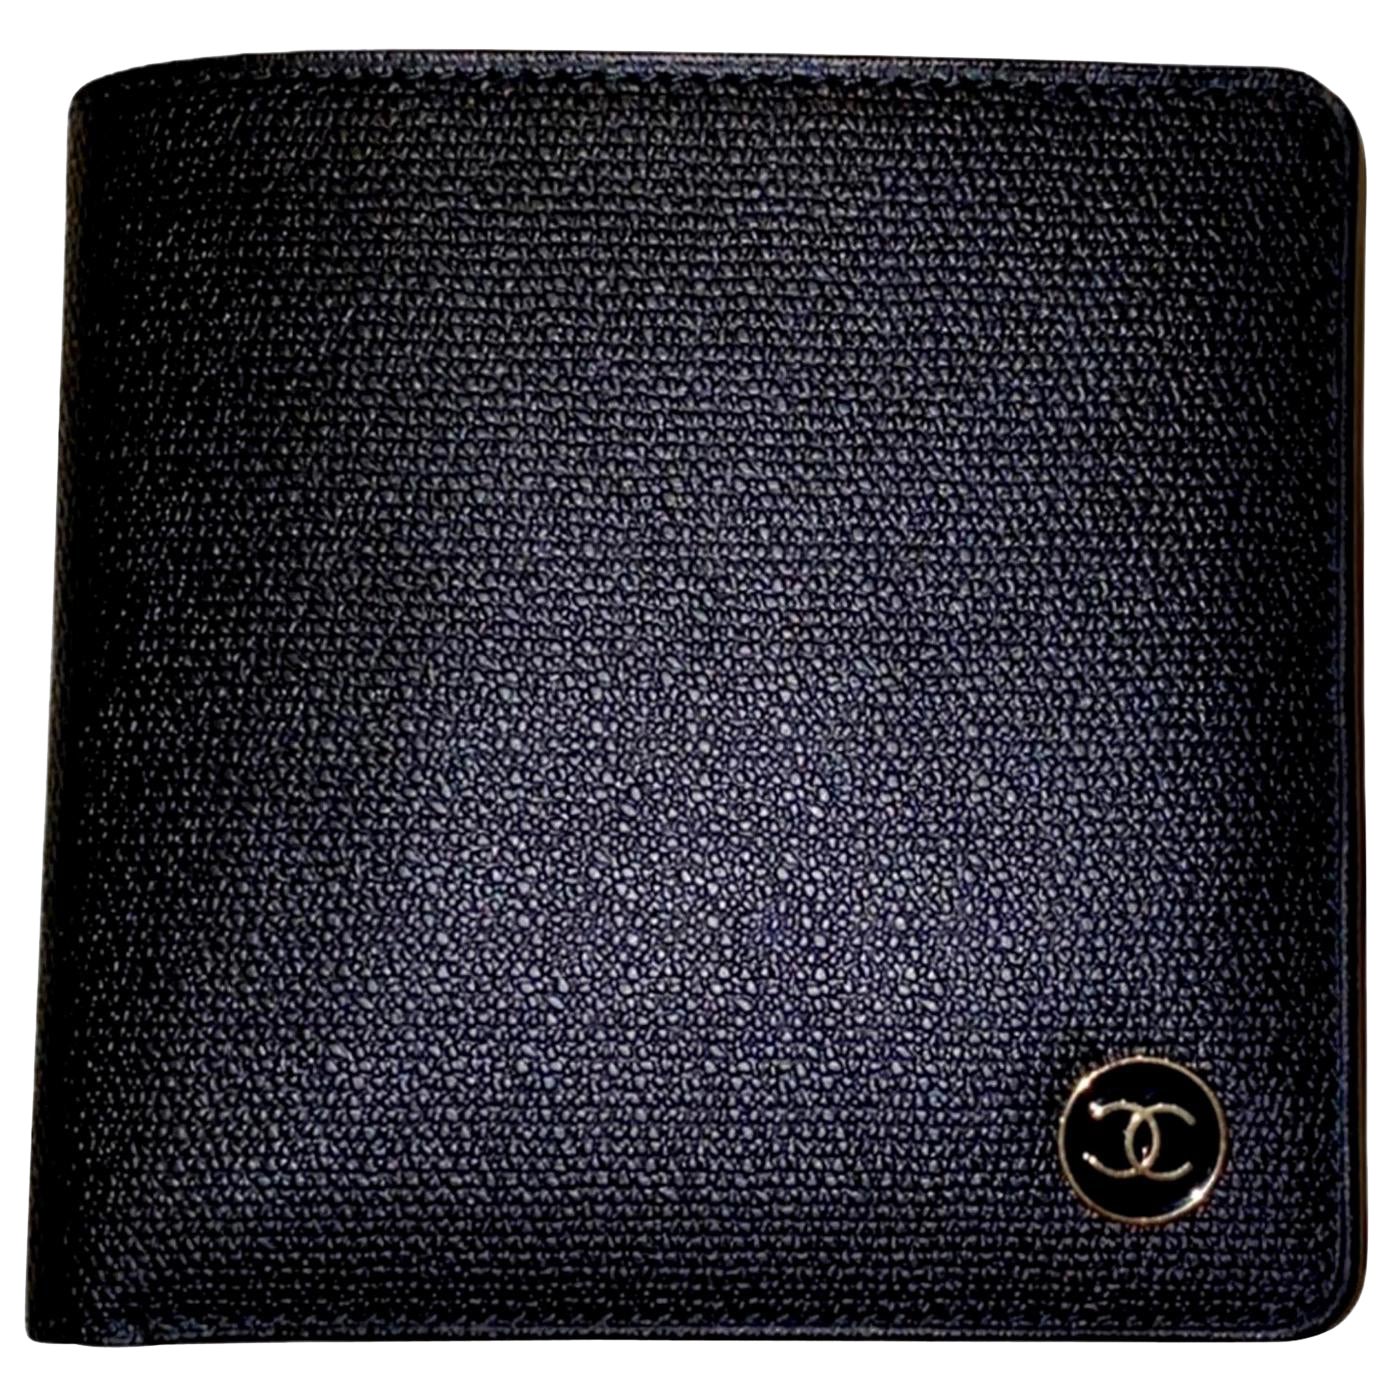 NEW Chanel Black CC Logo Flap Wallet - Full Set with Box & Card